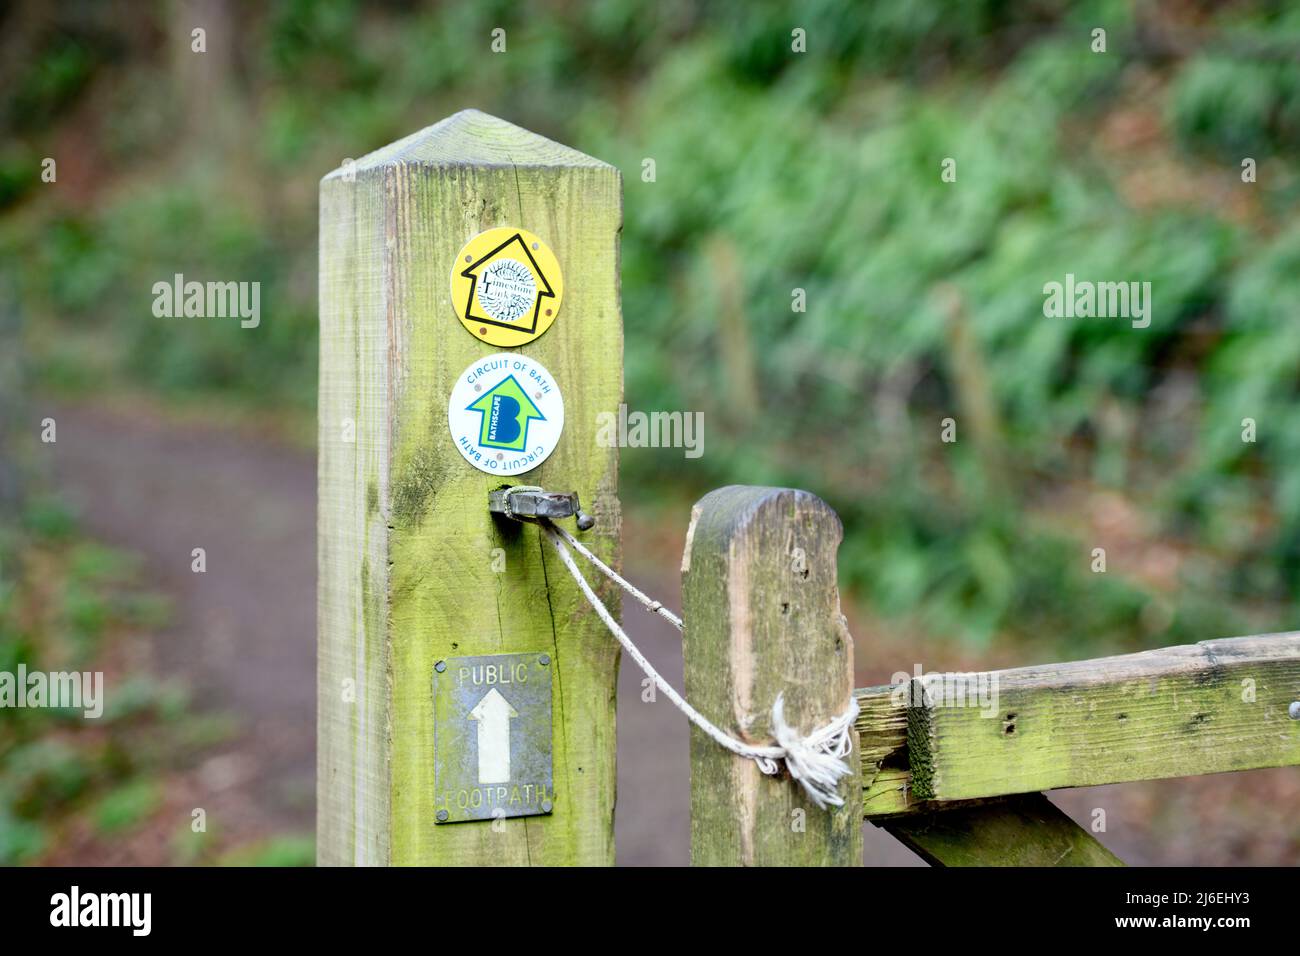 Public footpath arrows near Bath, UK Stock Photo